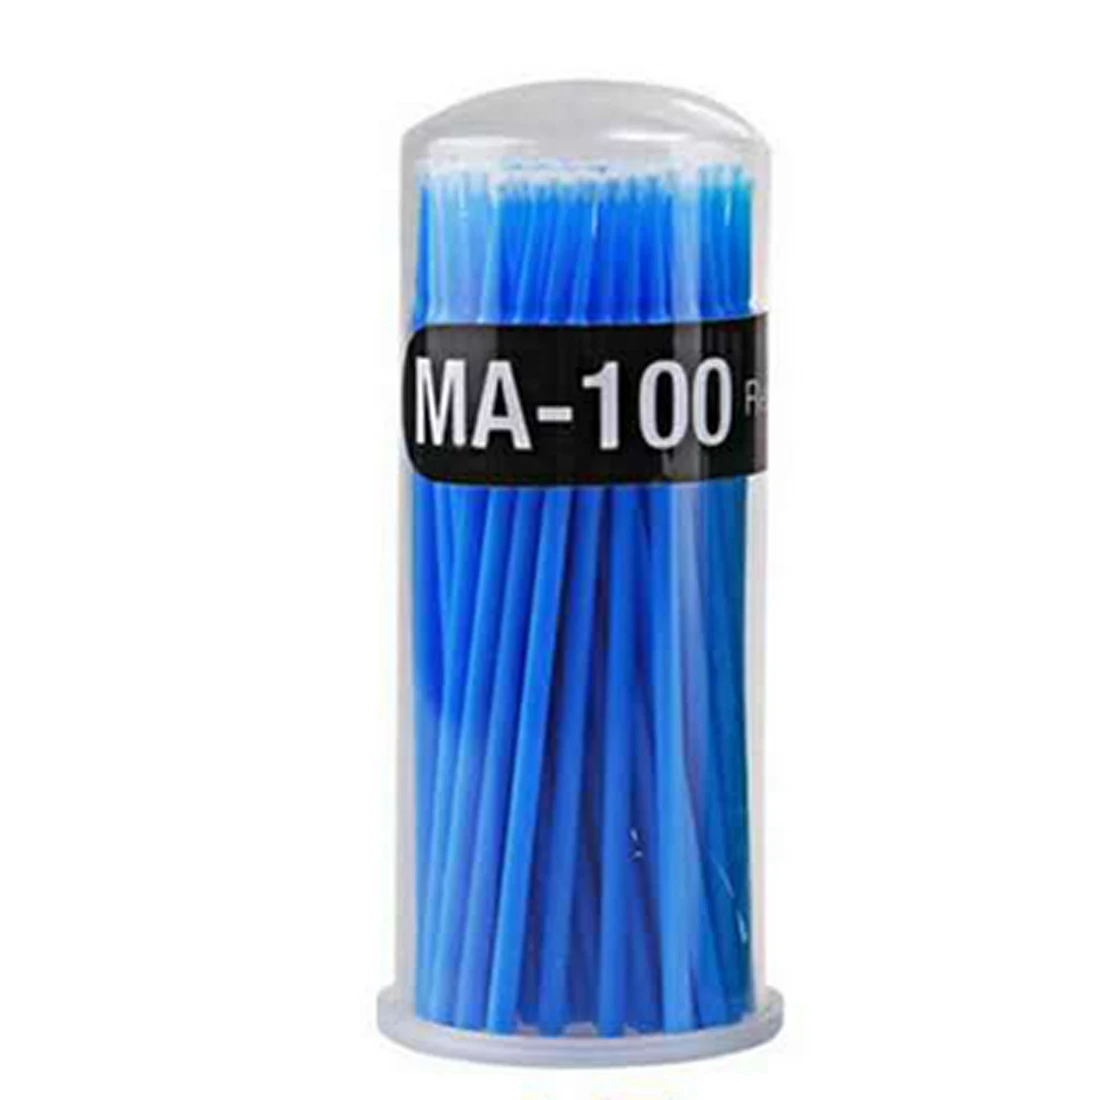 

Hot Sale 100pcs/pack Disposable Makeup Brushes Swab Durable Micro Mascara Brush Eyelash Extension Individual Lash Removing Tools